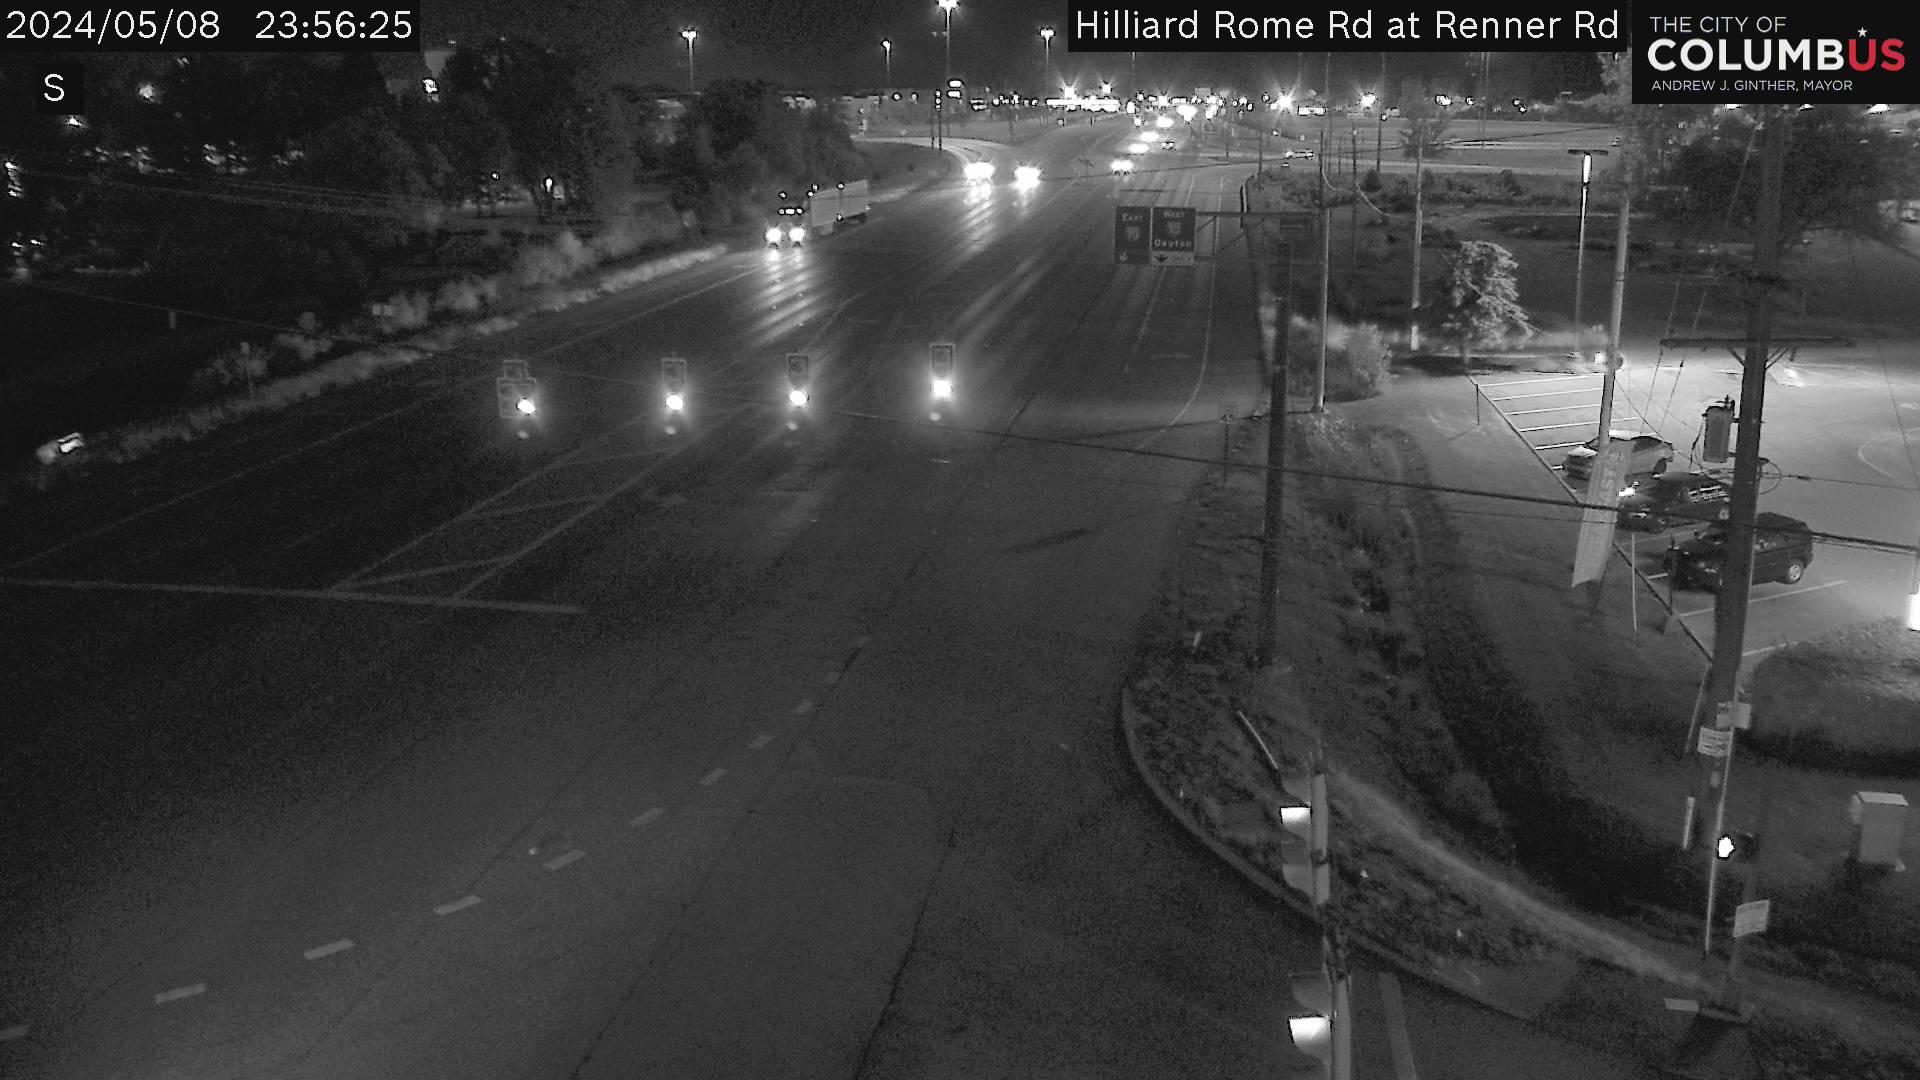 Alton: City of Columbus) Hilliard-Rome Rd at Renner Rd Traffic Camera